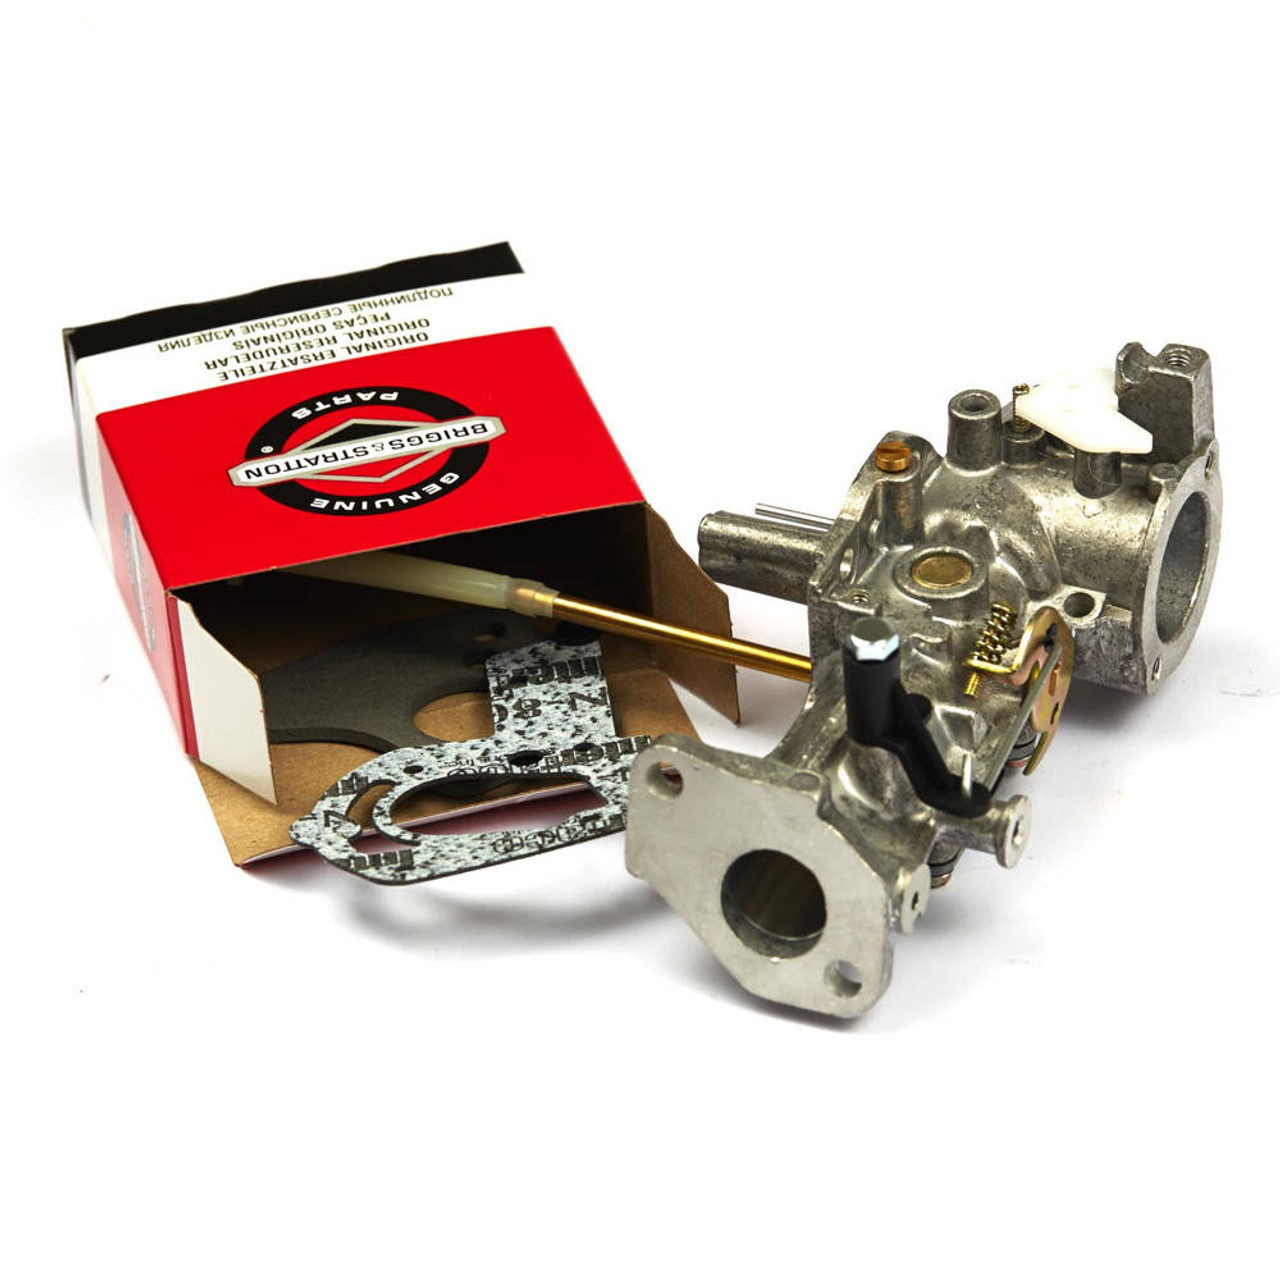 Carburetor fits for Briggs & Stratton 5HP Engine 498298 692784